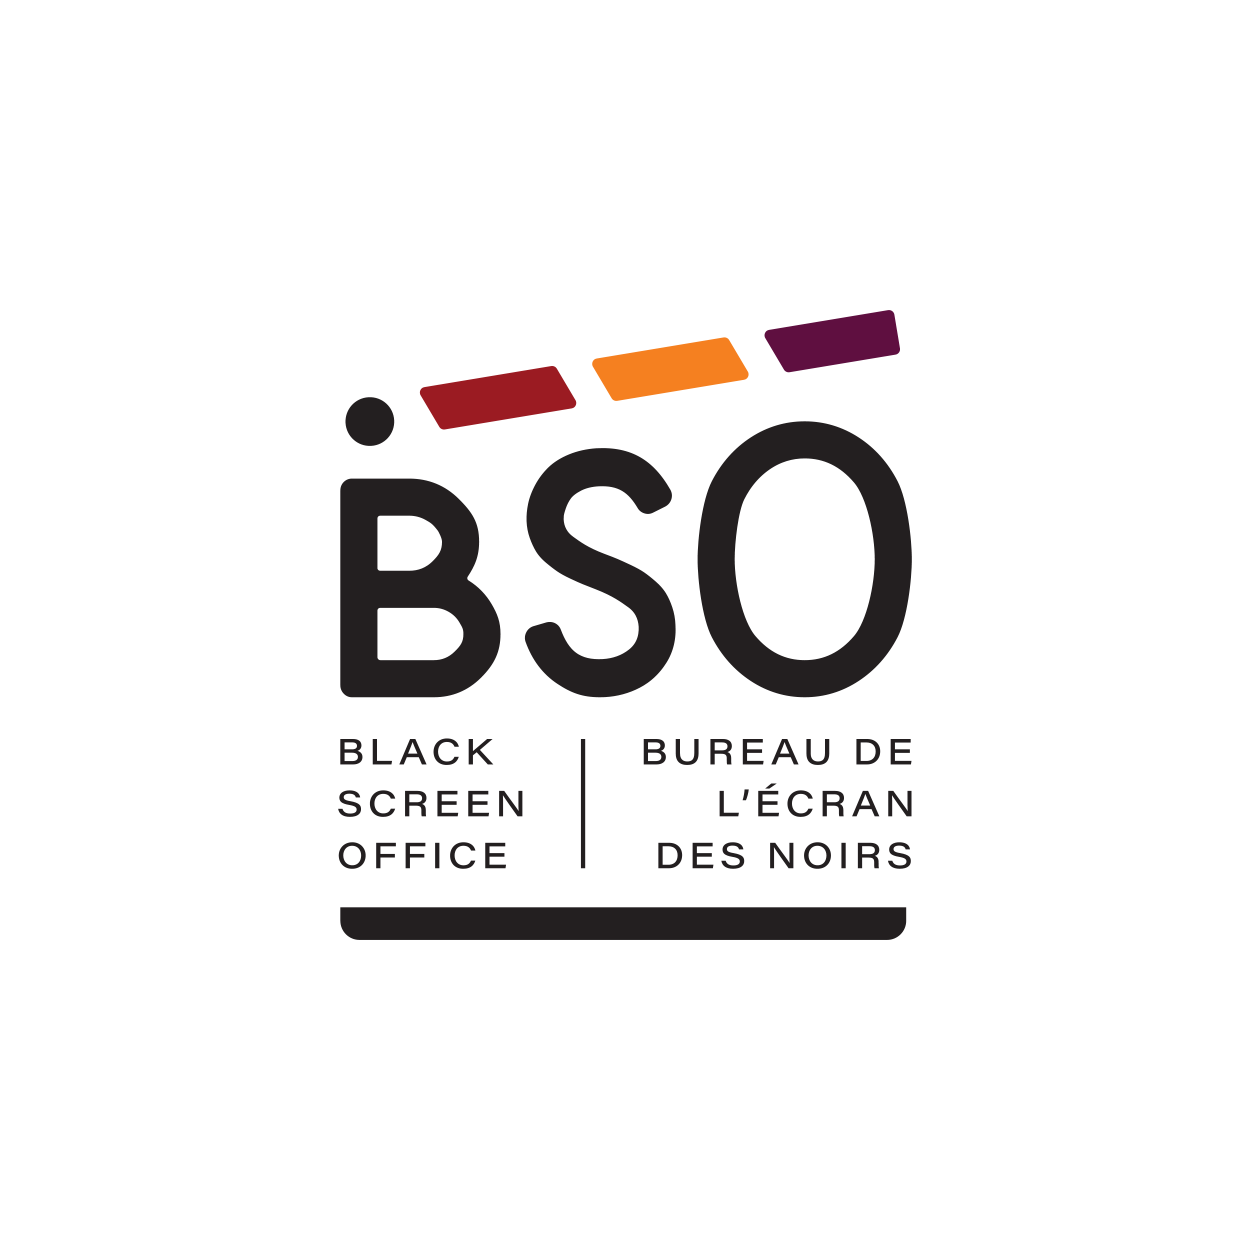 Black Screen Office logo